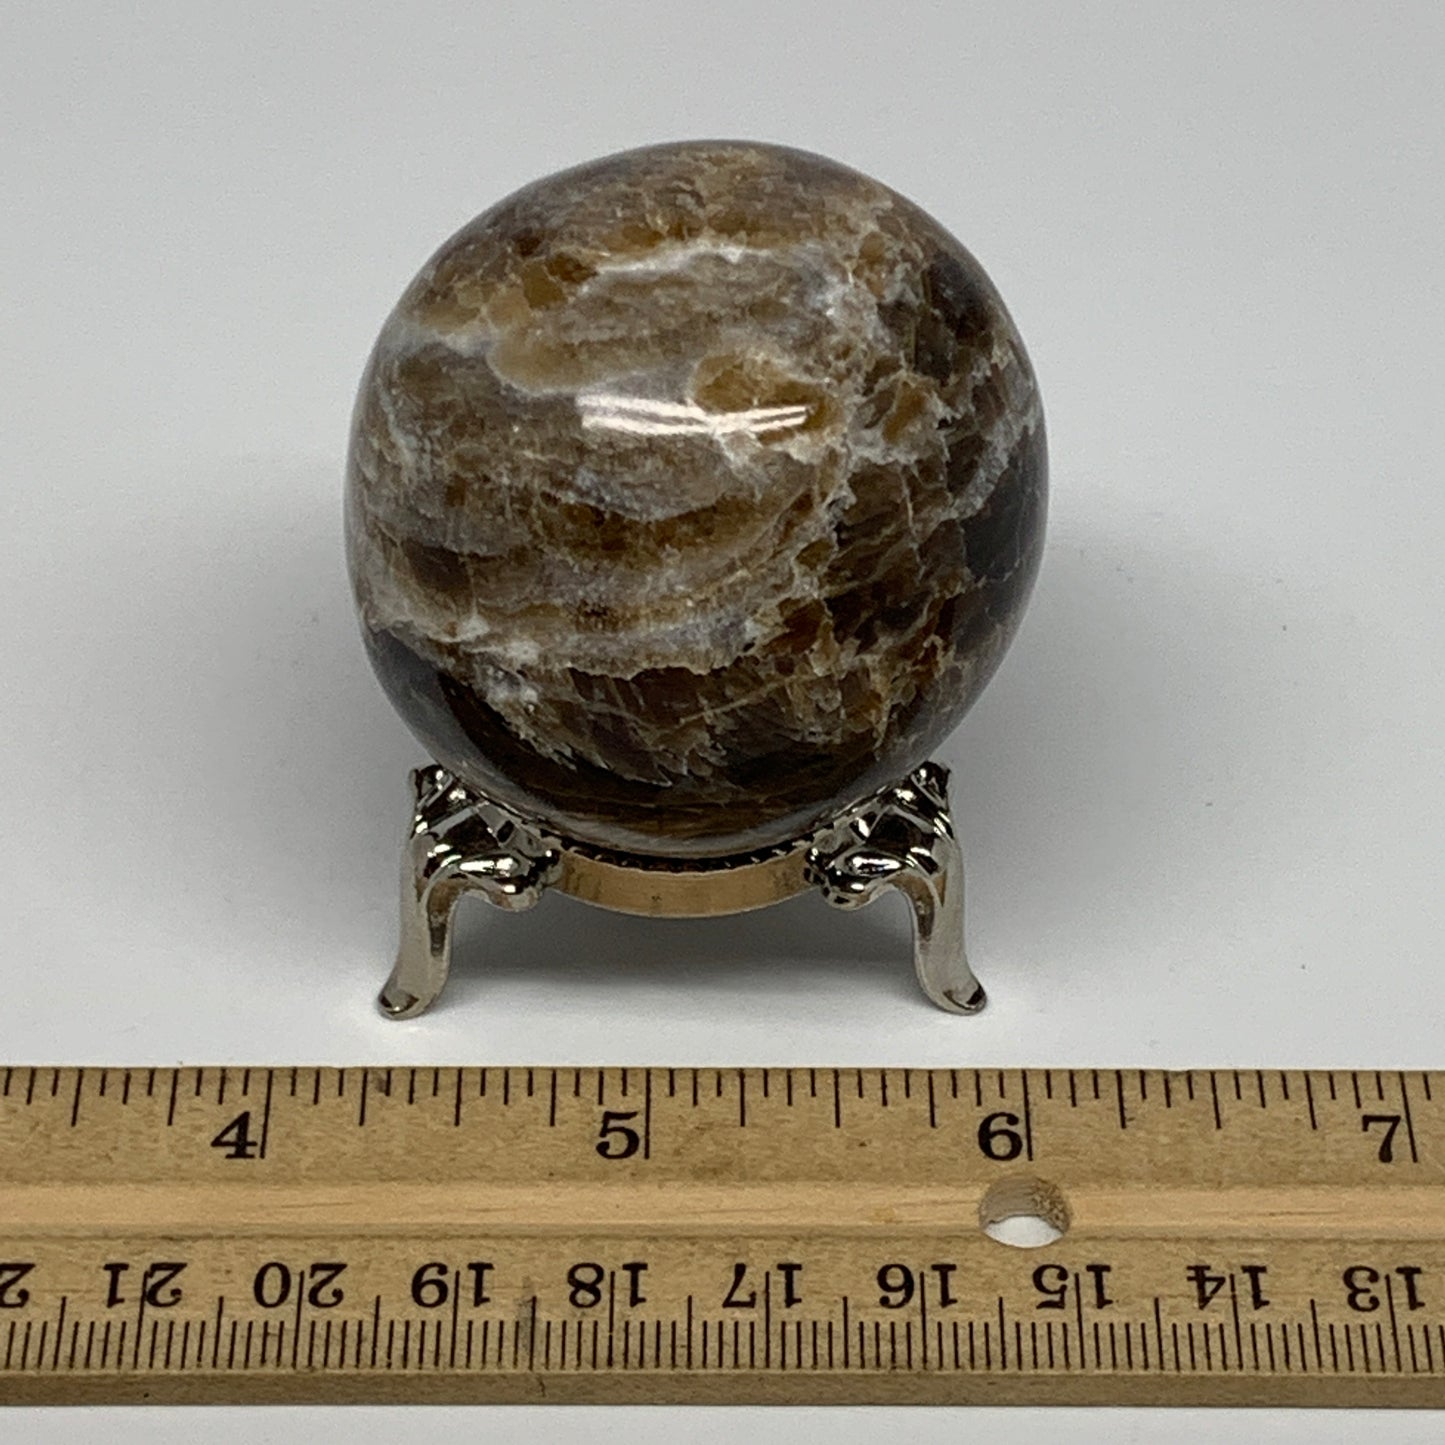 124g, 1.9" (47mm), Chocolate/Gray Onyx Sphere Ball Gemstone @Morocco, B18879